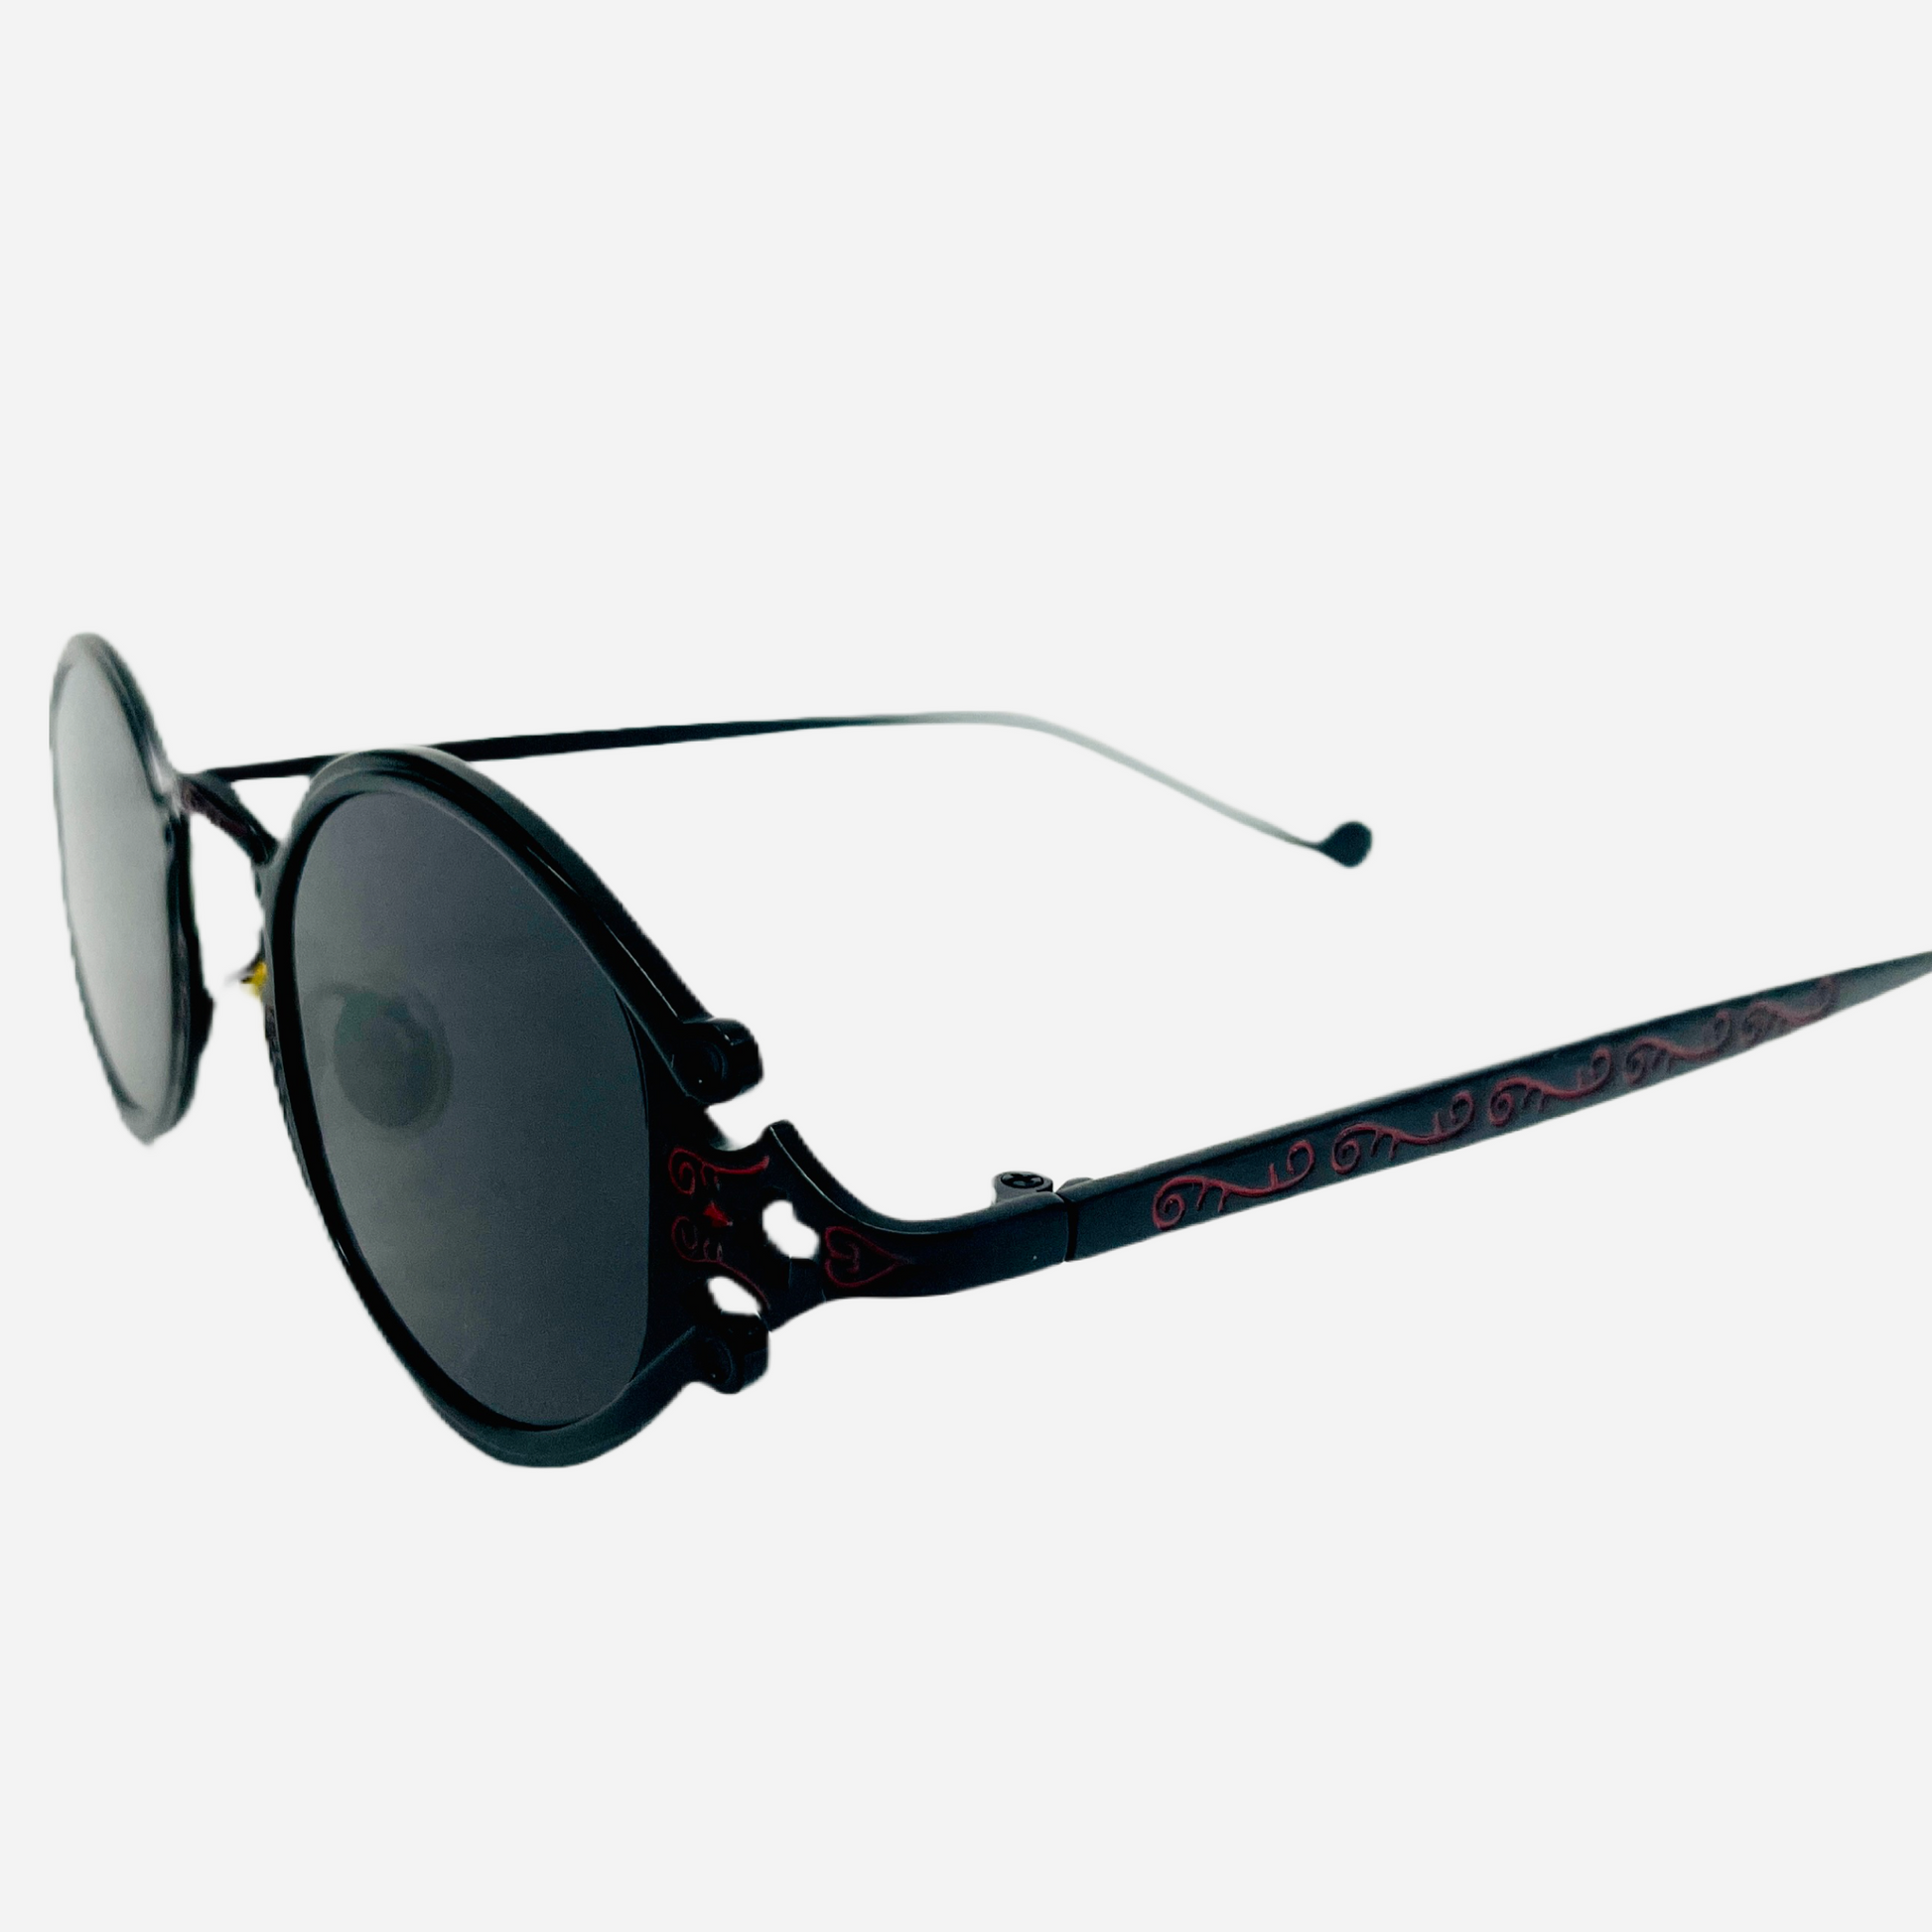 Vintage-Jean-Paul-Gaultier-Sonnenbrille-Sunglasses-Model-56-0001-black-side